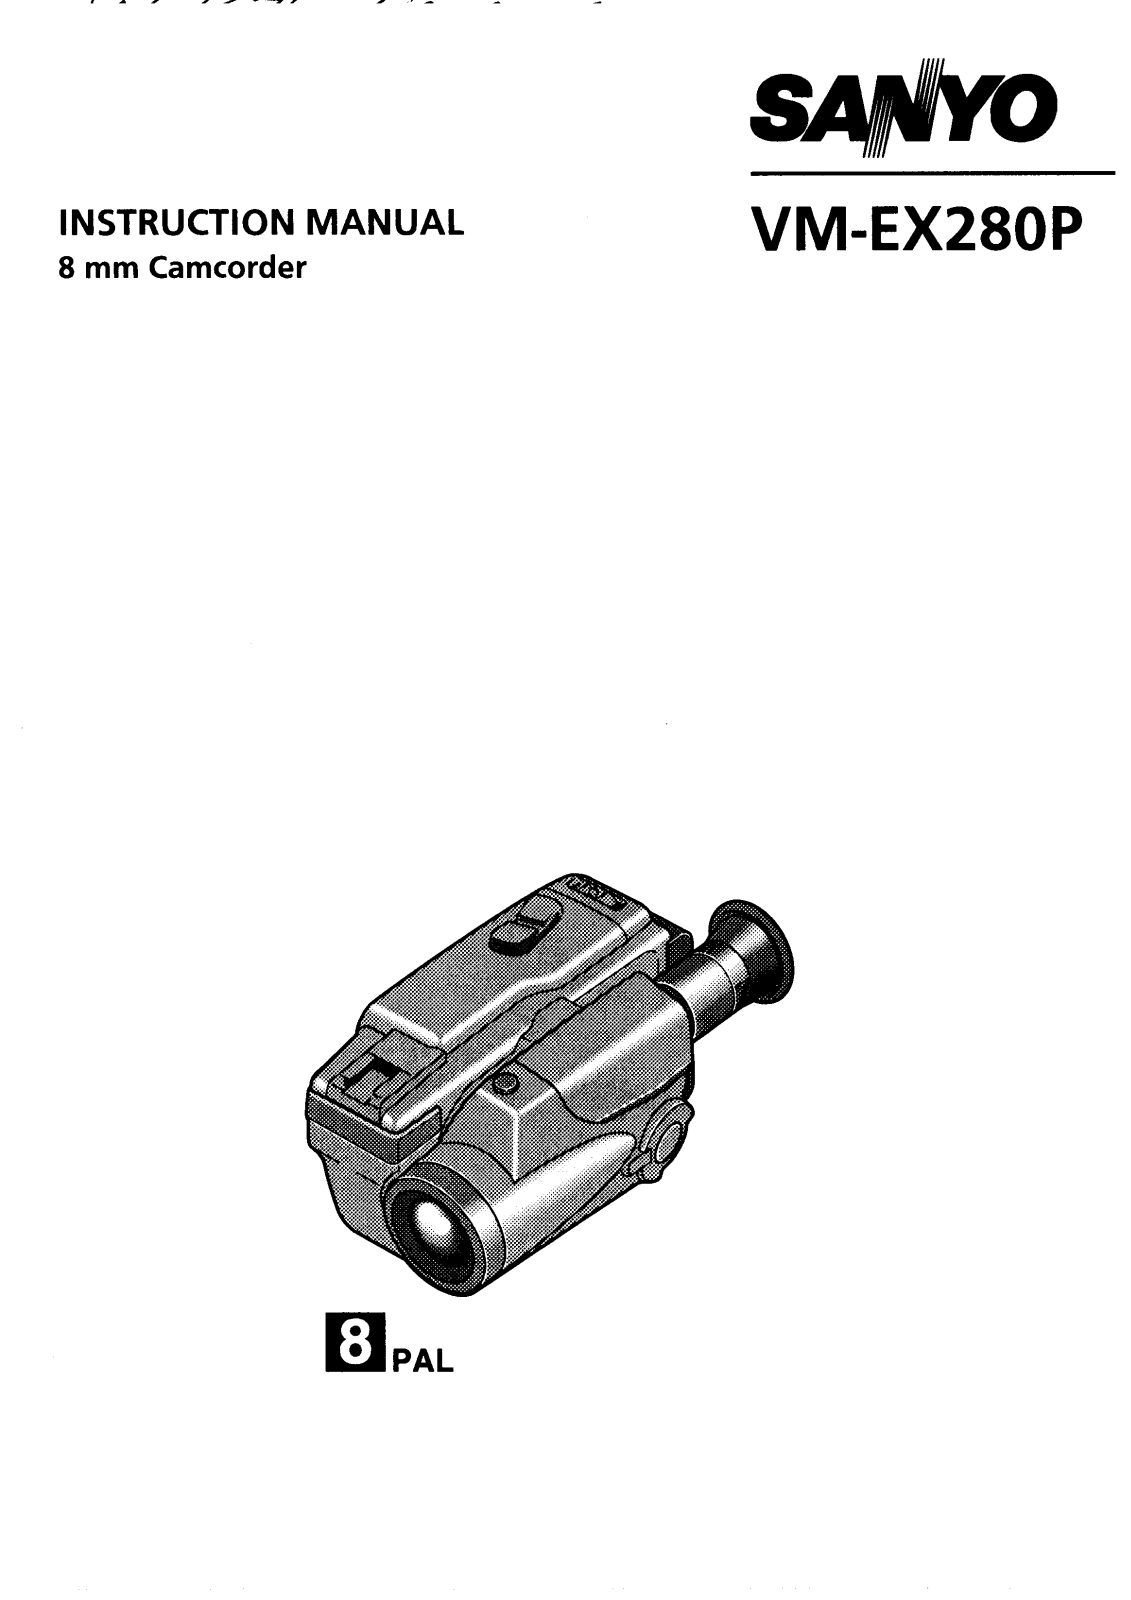 SANYO VM-EX280P User Manual